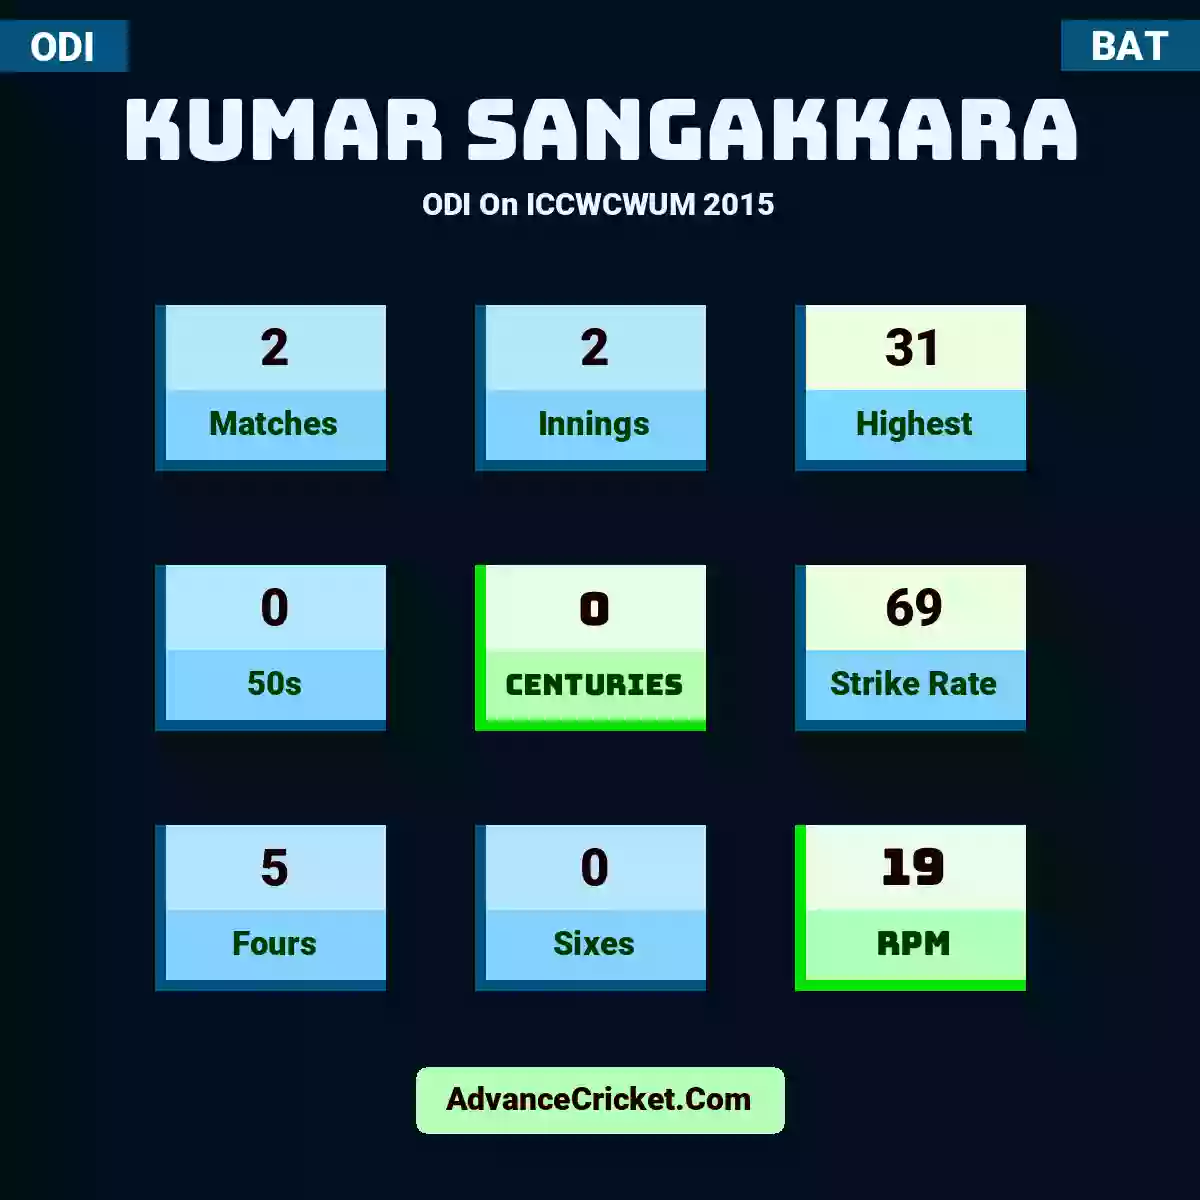 Kumar Sangakkara ODI  On ICCWCWUM 2015, Kumar Sangakkara played 2 matches, scored 31 runs as highest, 0 half-centuries, and 0 centuries, with a strike rate of 69. K.Sangakkara hit 5 fours and 0 sixes, with an RPM of 19.